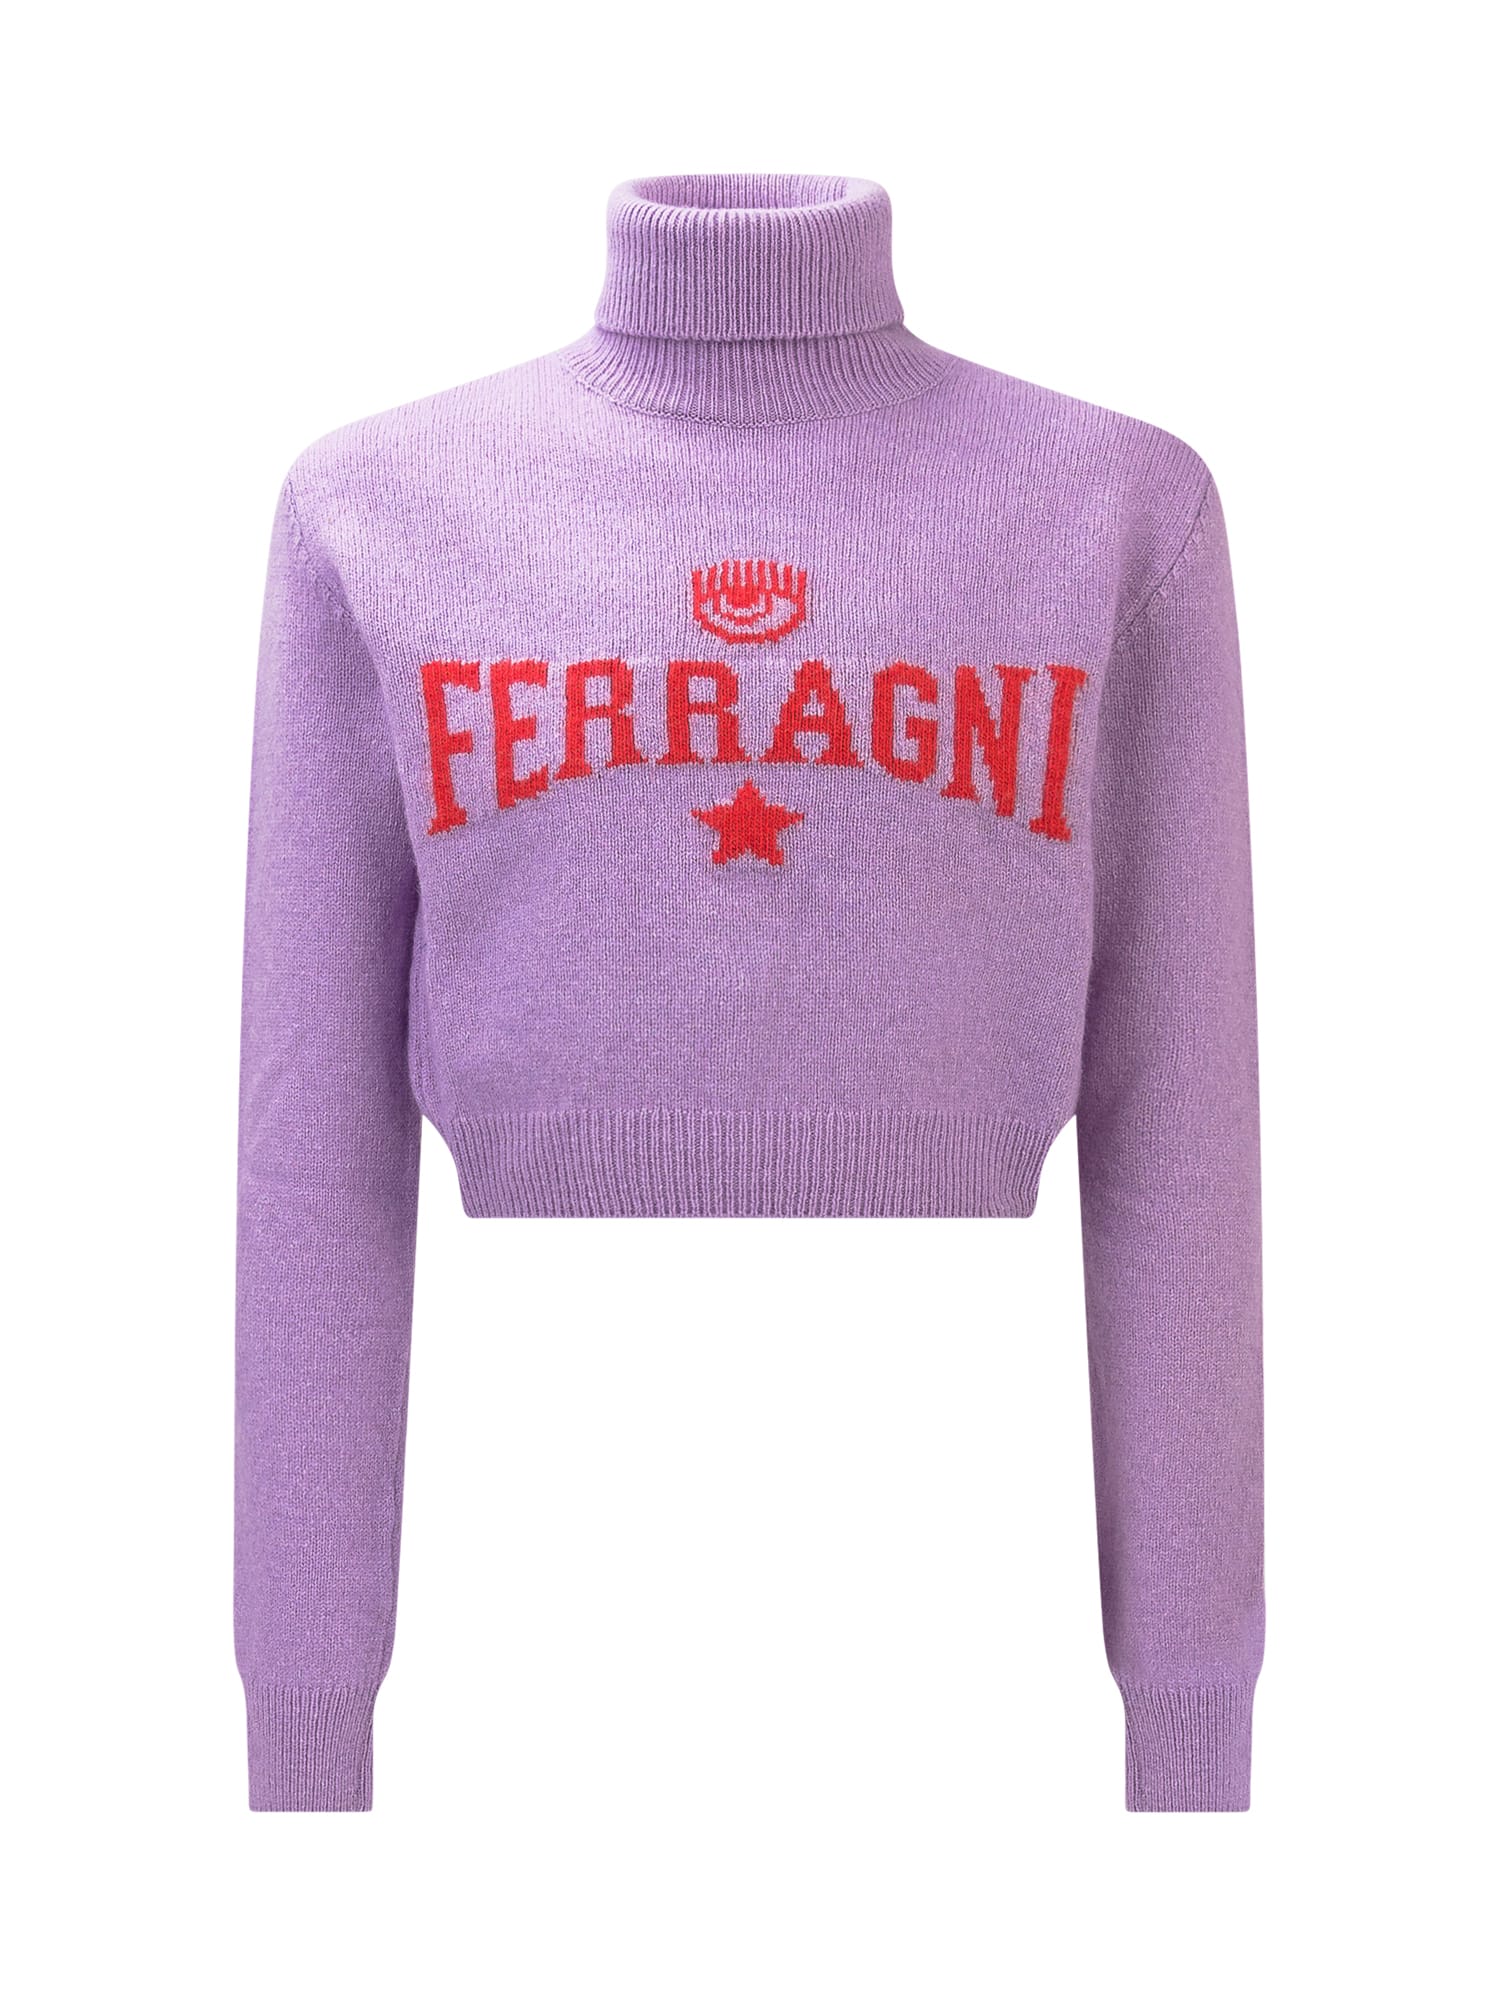 Chiara Ferragni Eye Star Sweater - 0PURPLE ROSE - female - Size: Medium